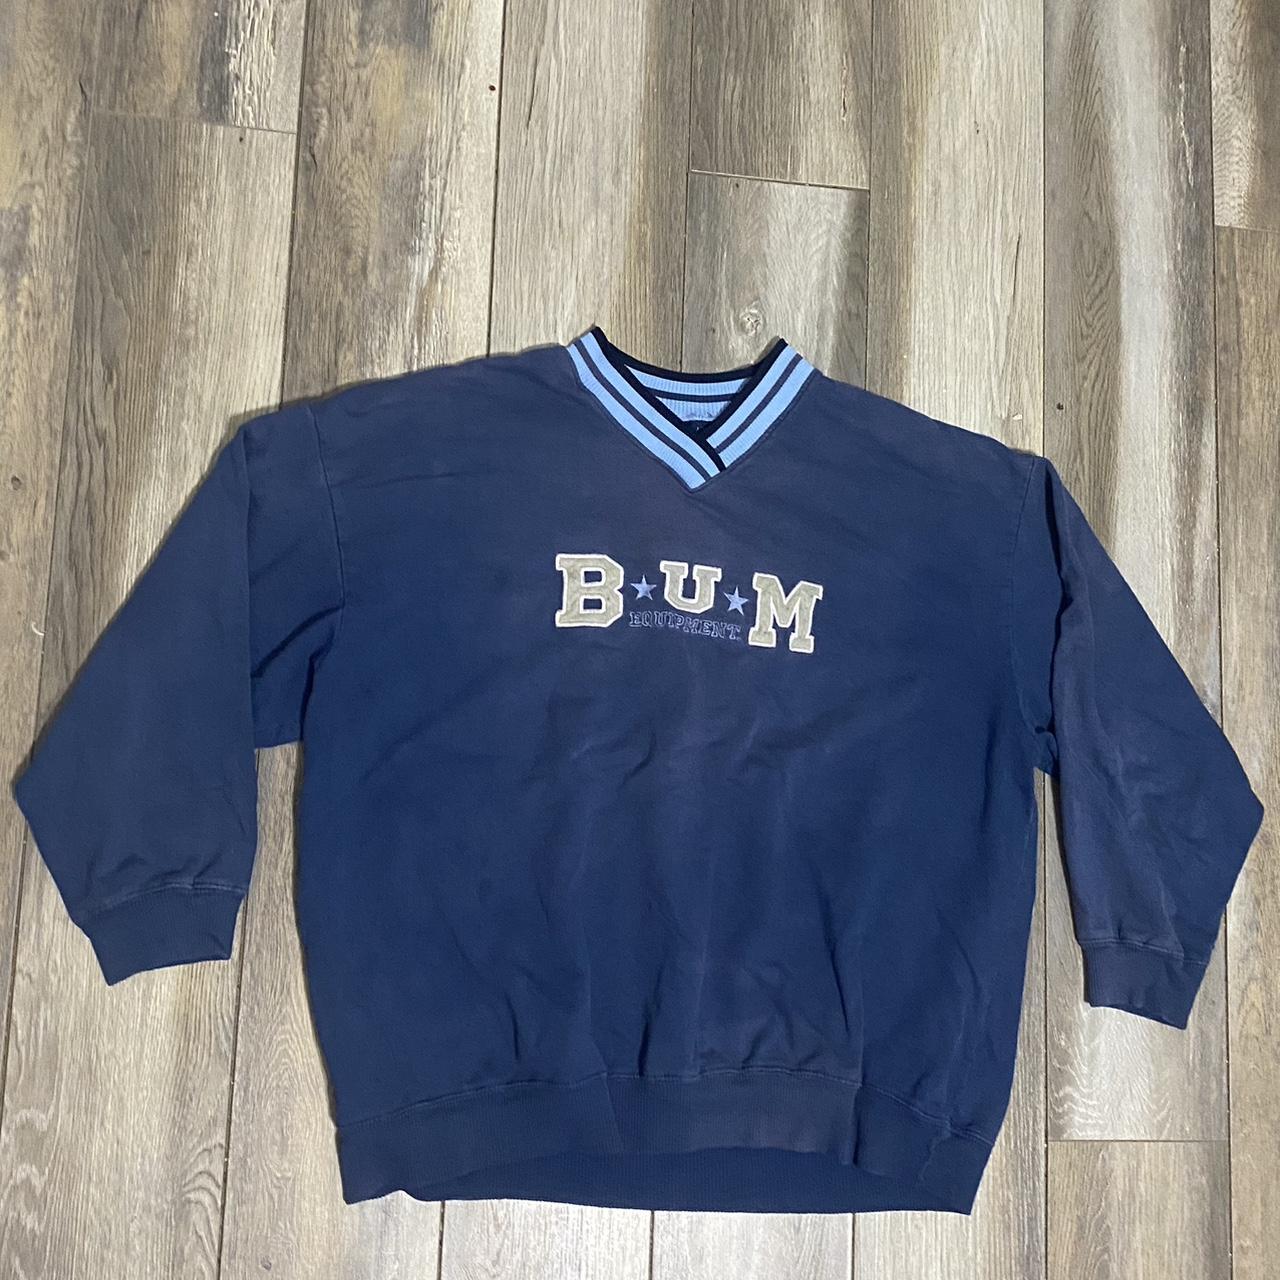 B.U.M. Equipment Men's Sweatshirt